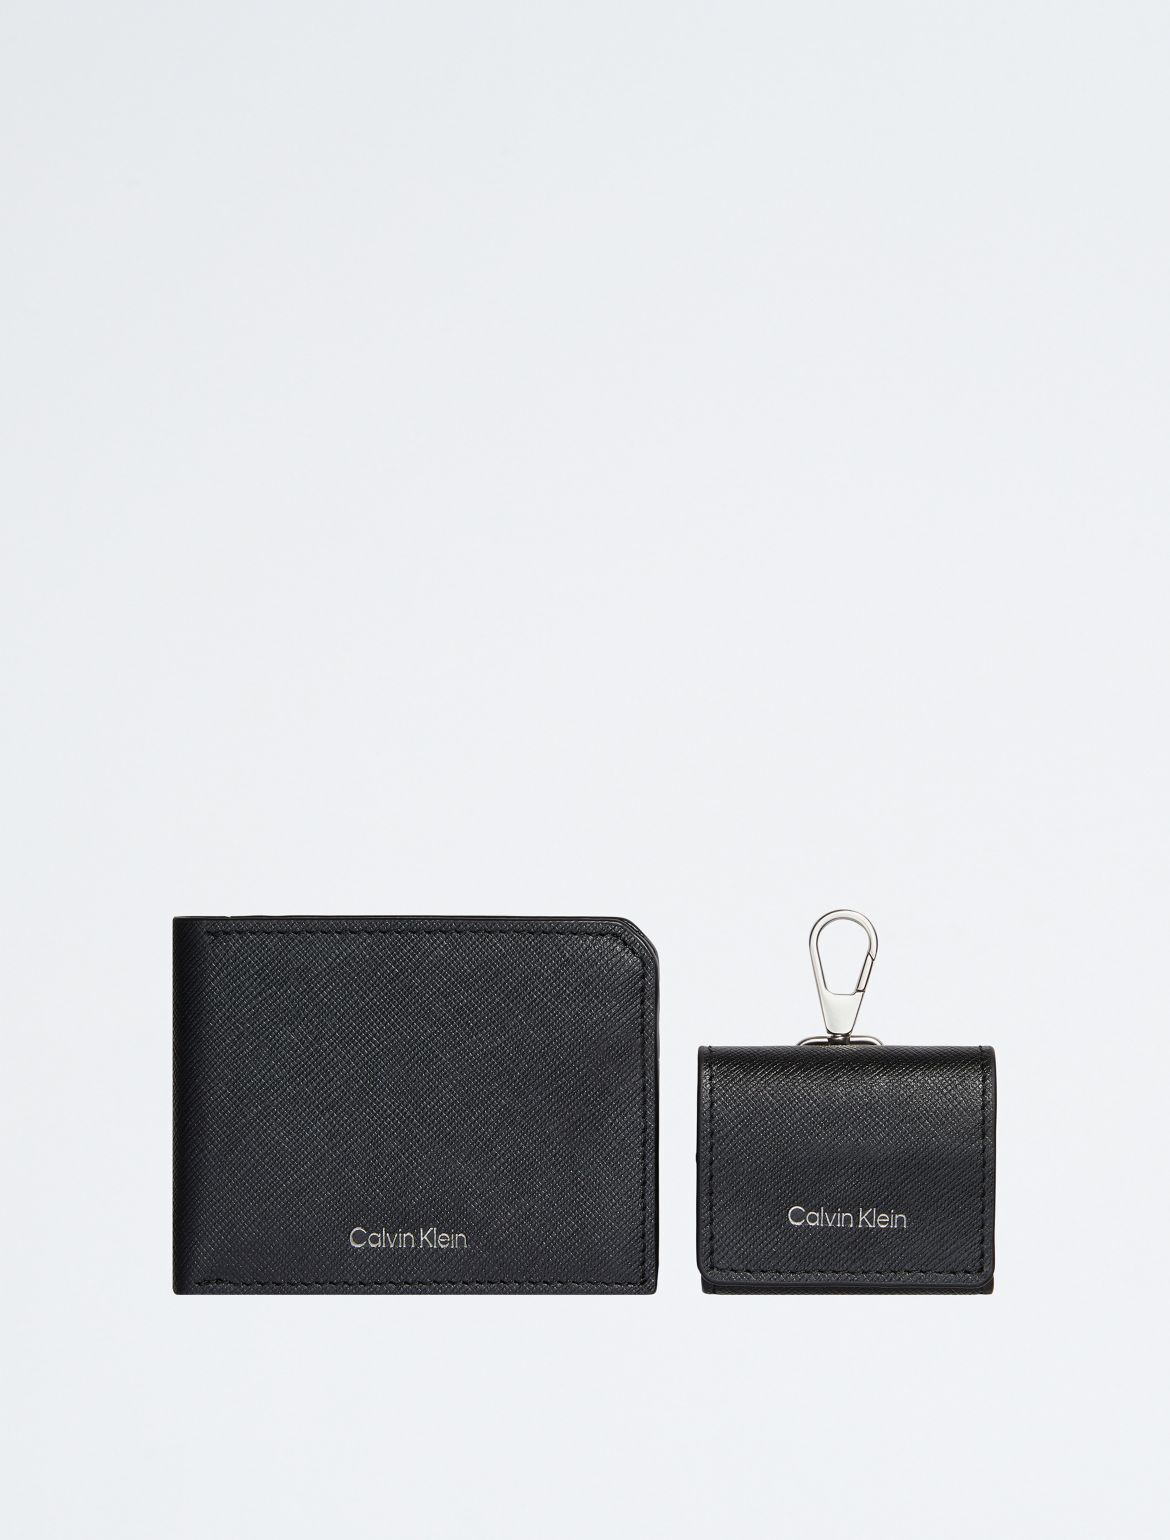 Calvin Klein Men's Refined Saffiano Leather Bifold Wallet + Airpods Case Gift Set - Black